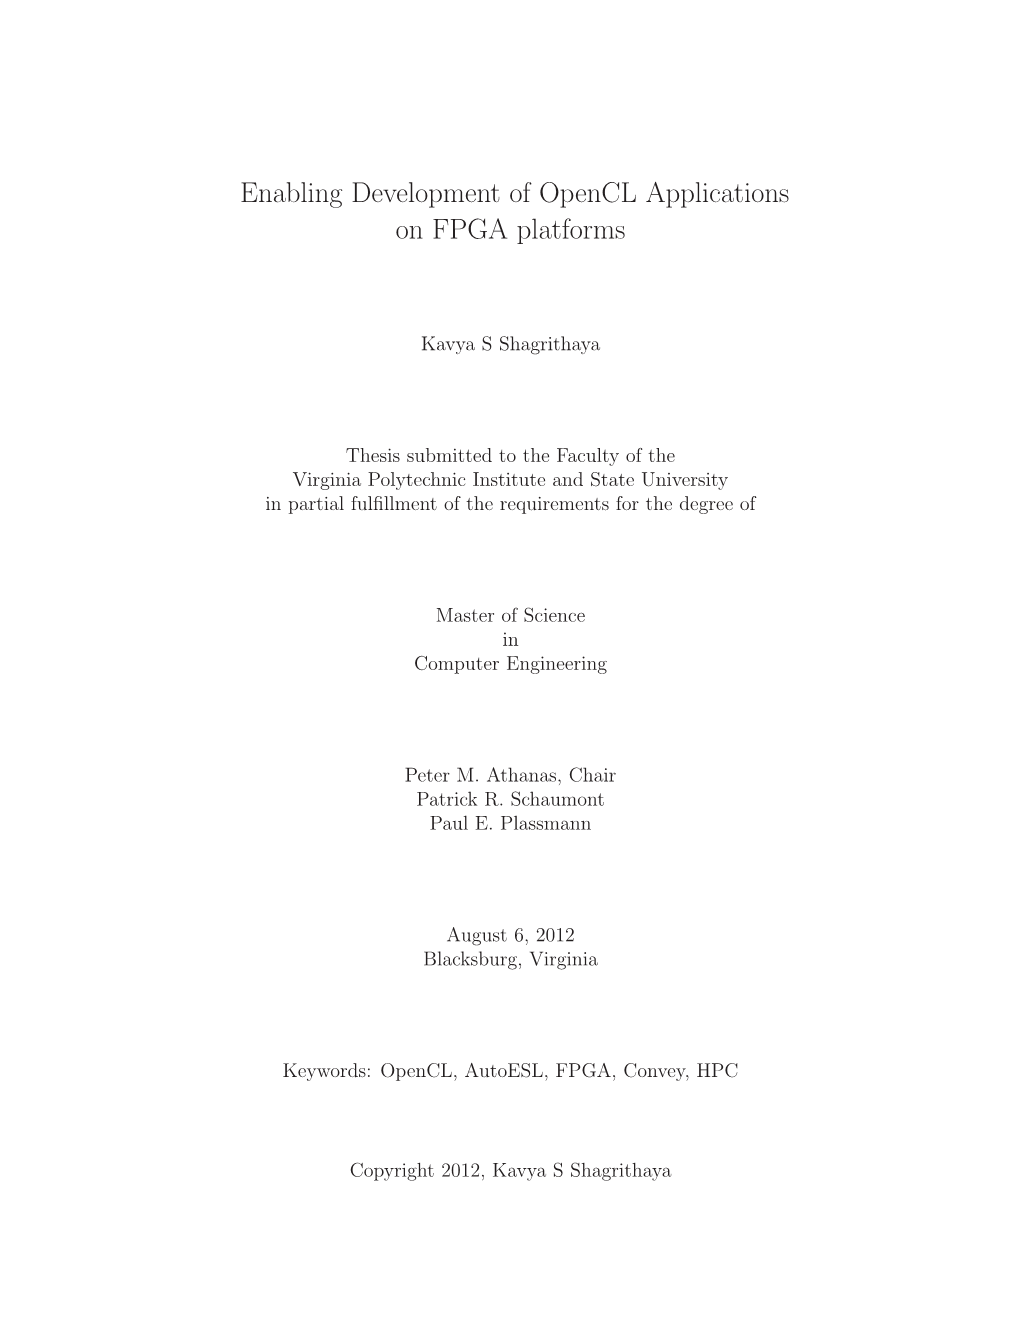 Enabling Development of Opencl Applications on FPGA Platforms